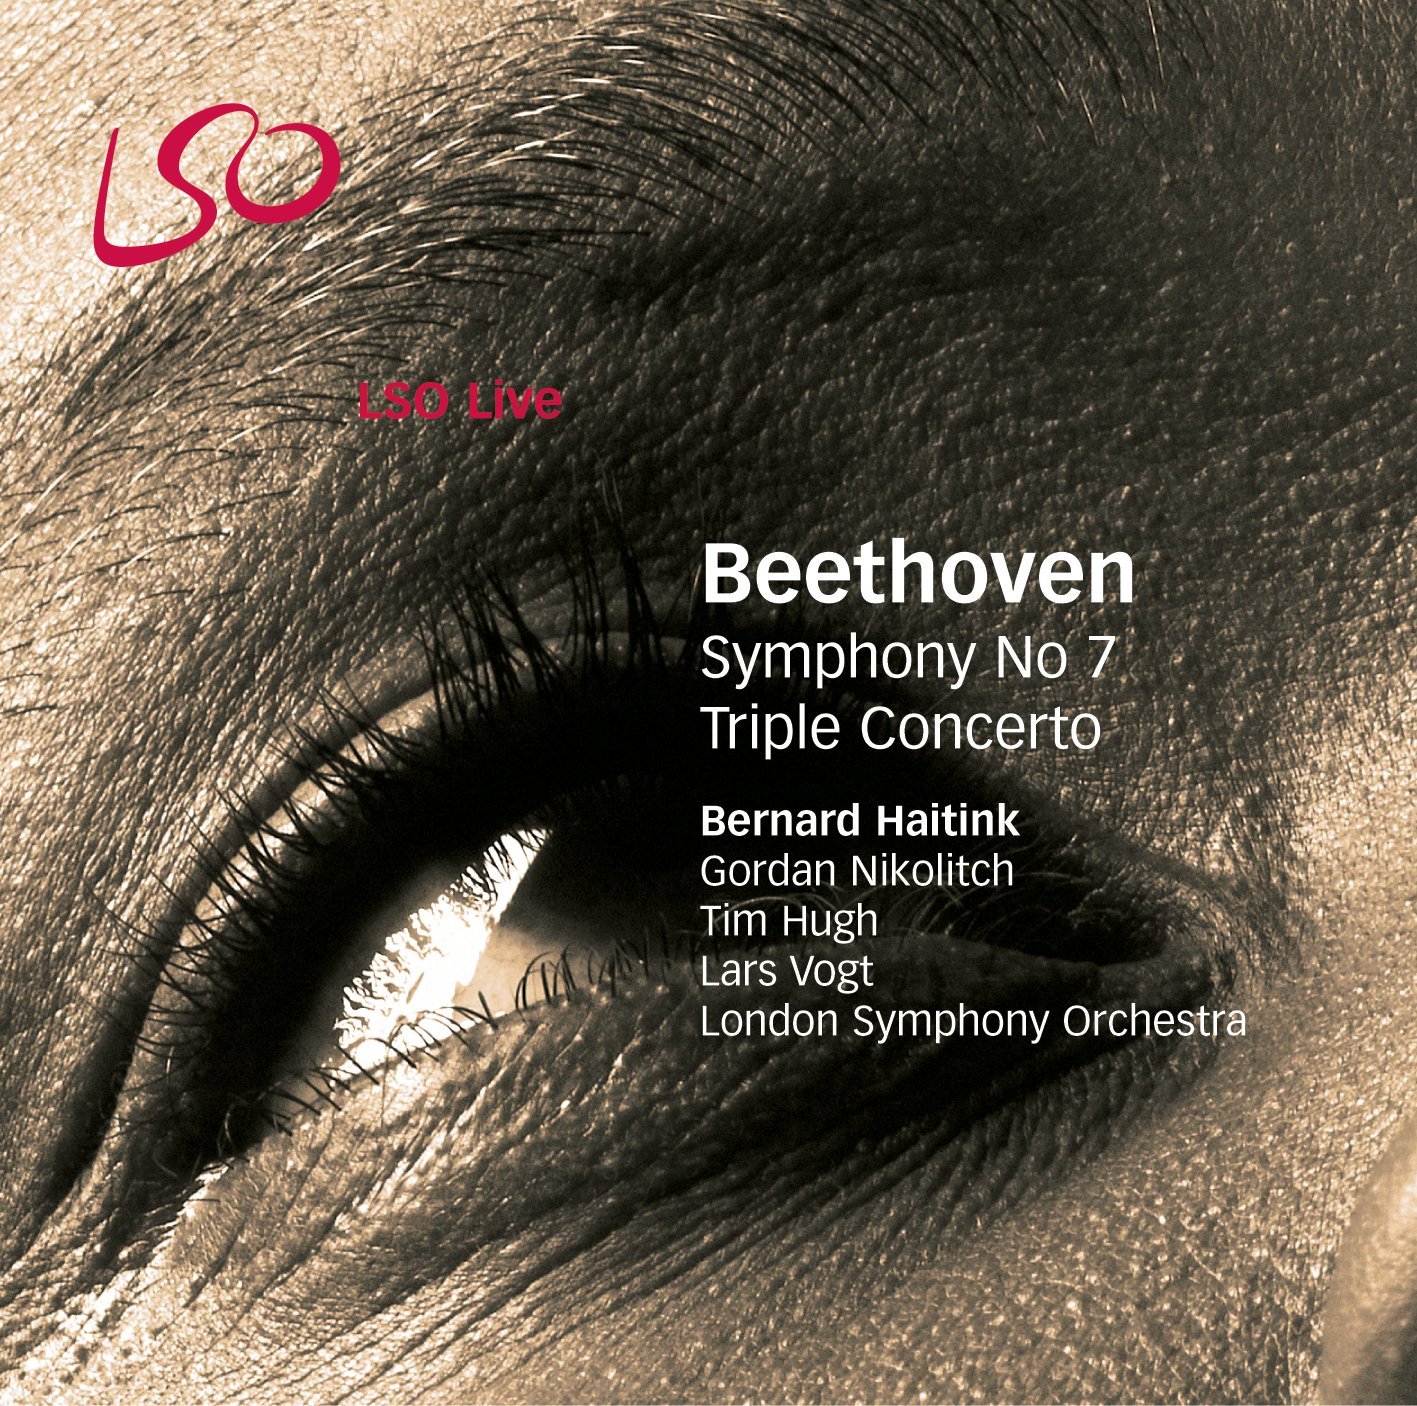 Beethoven - Symphony No 7 | London Symphony Orchestra, Ludwig Van Beethoven, Bernard Haitink, Lars Vogt